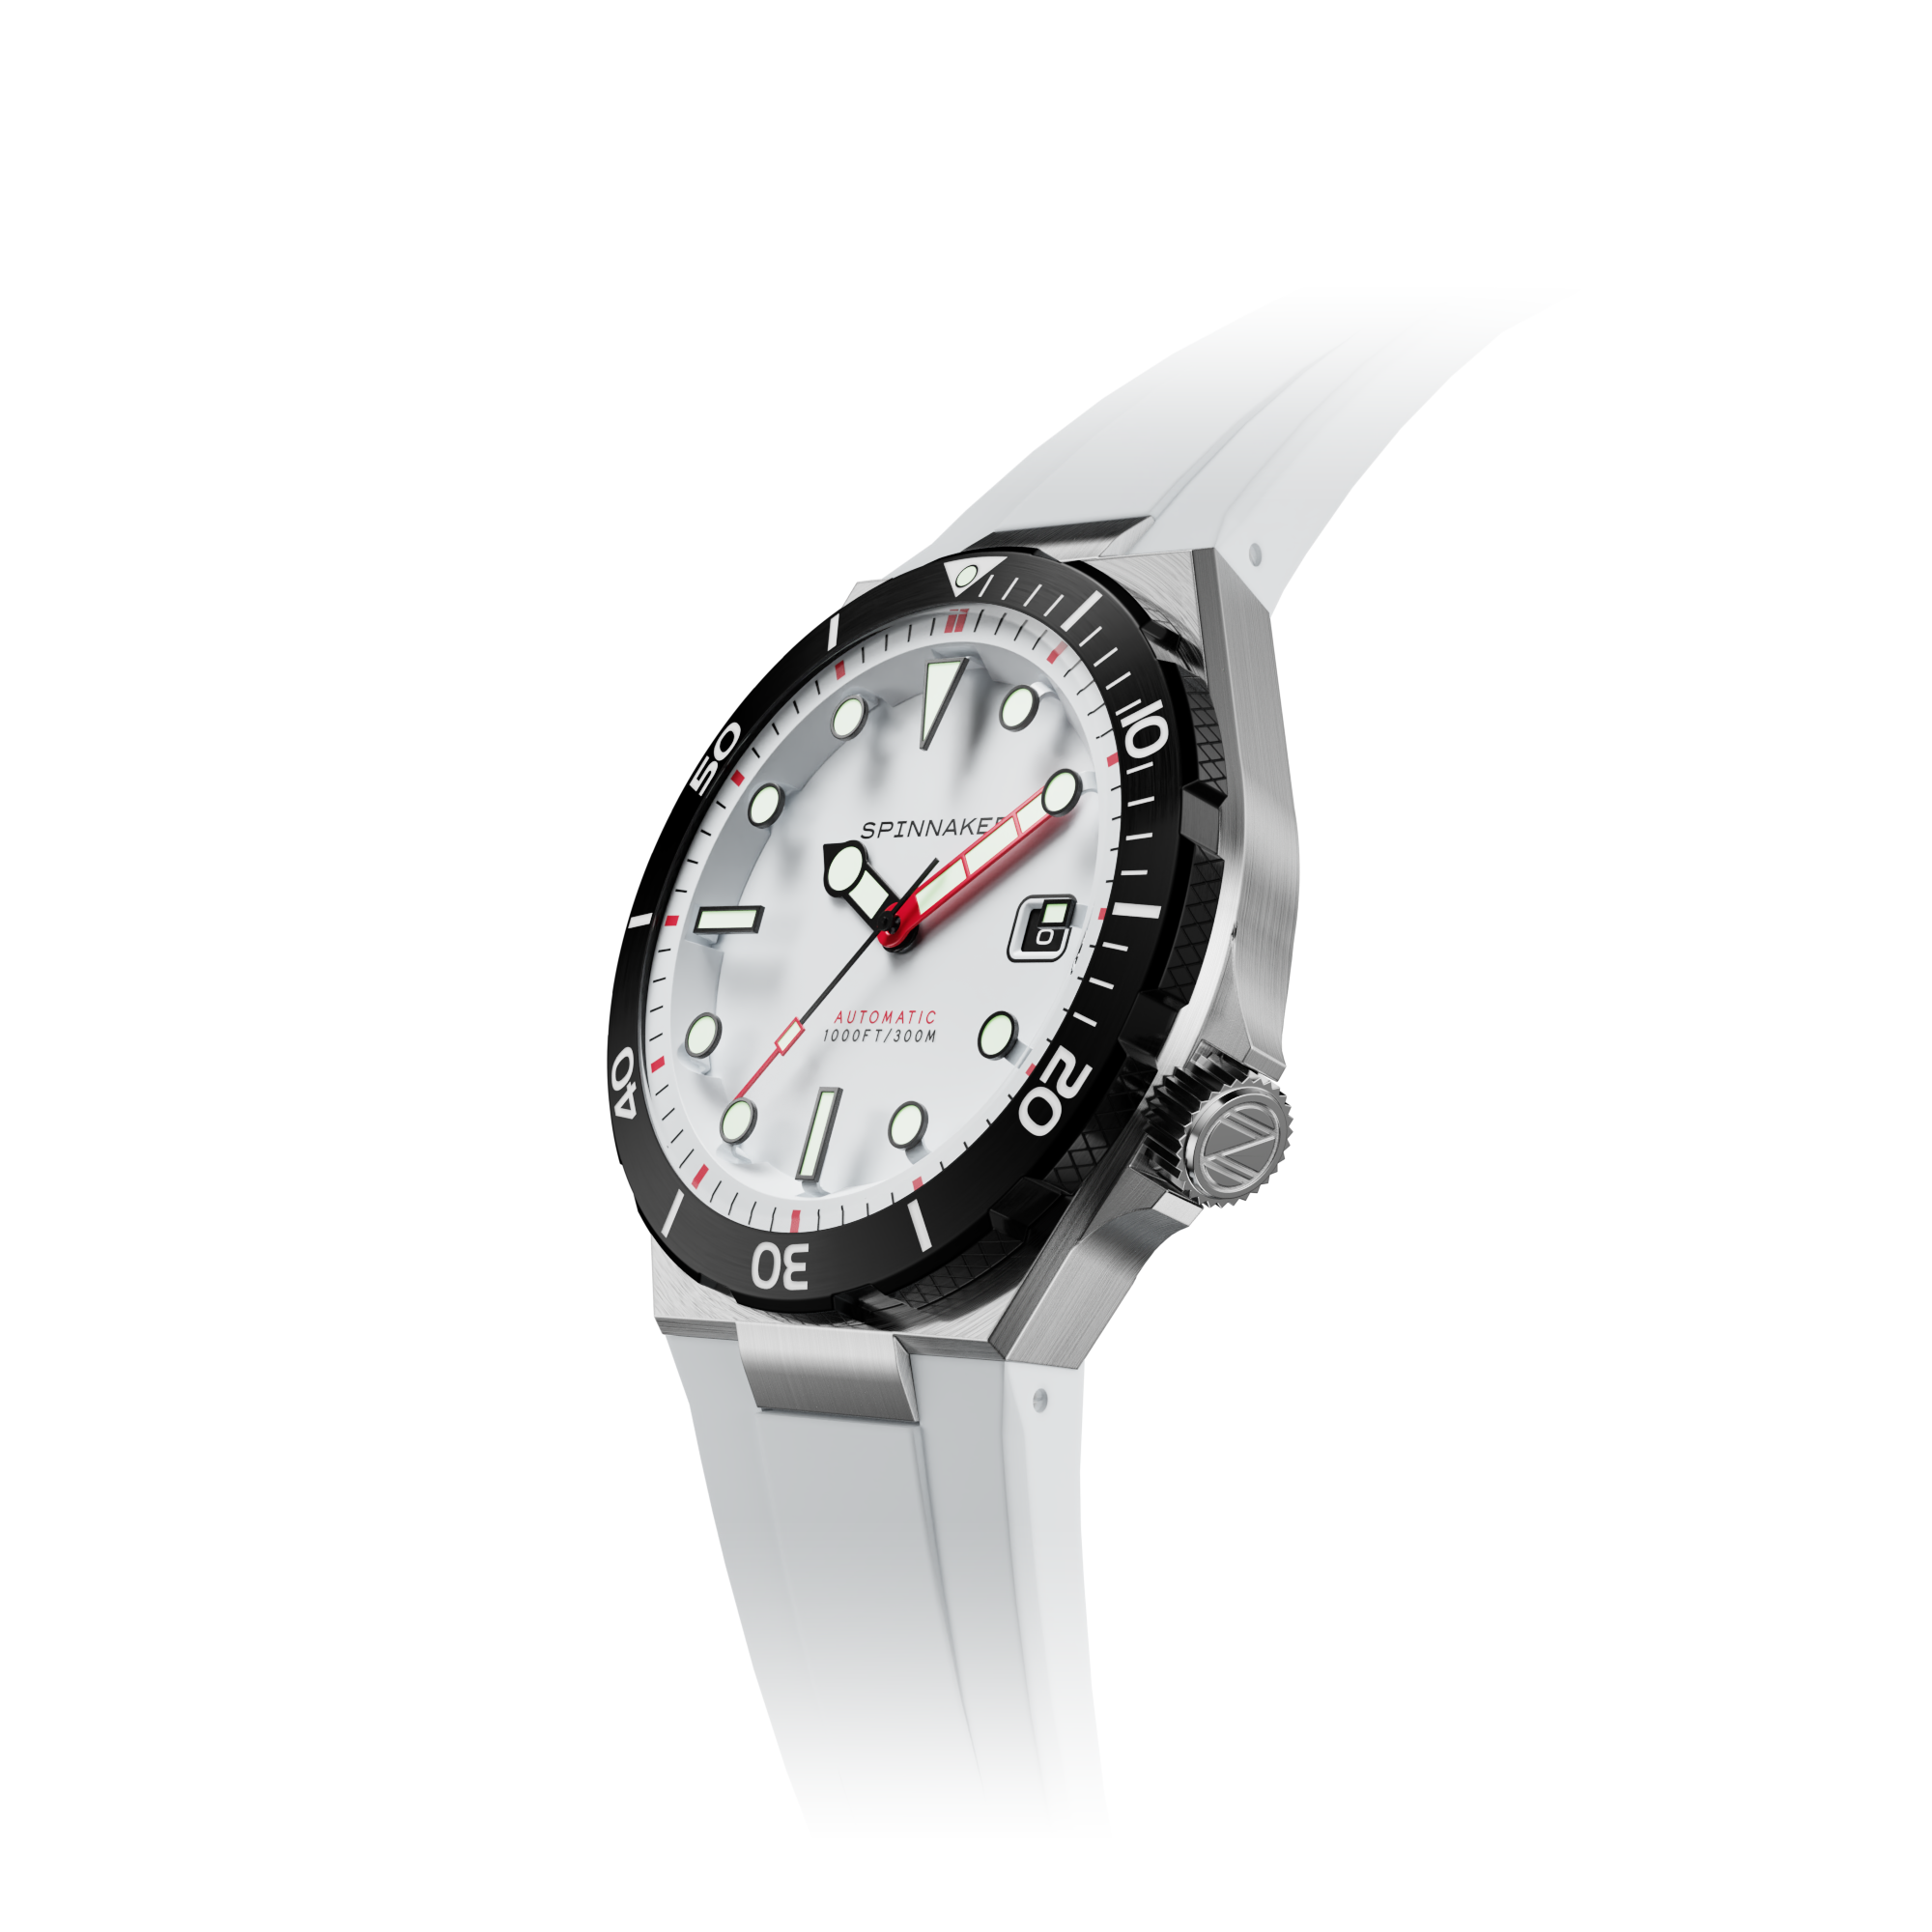 SPINNAKER Spinnaker Boettger Men's Automatic Limited Edition  Blizzard White Watch SP-5083-CC